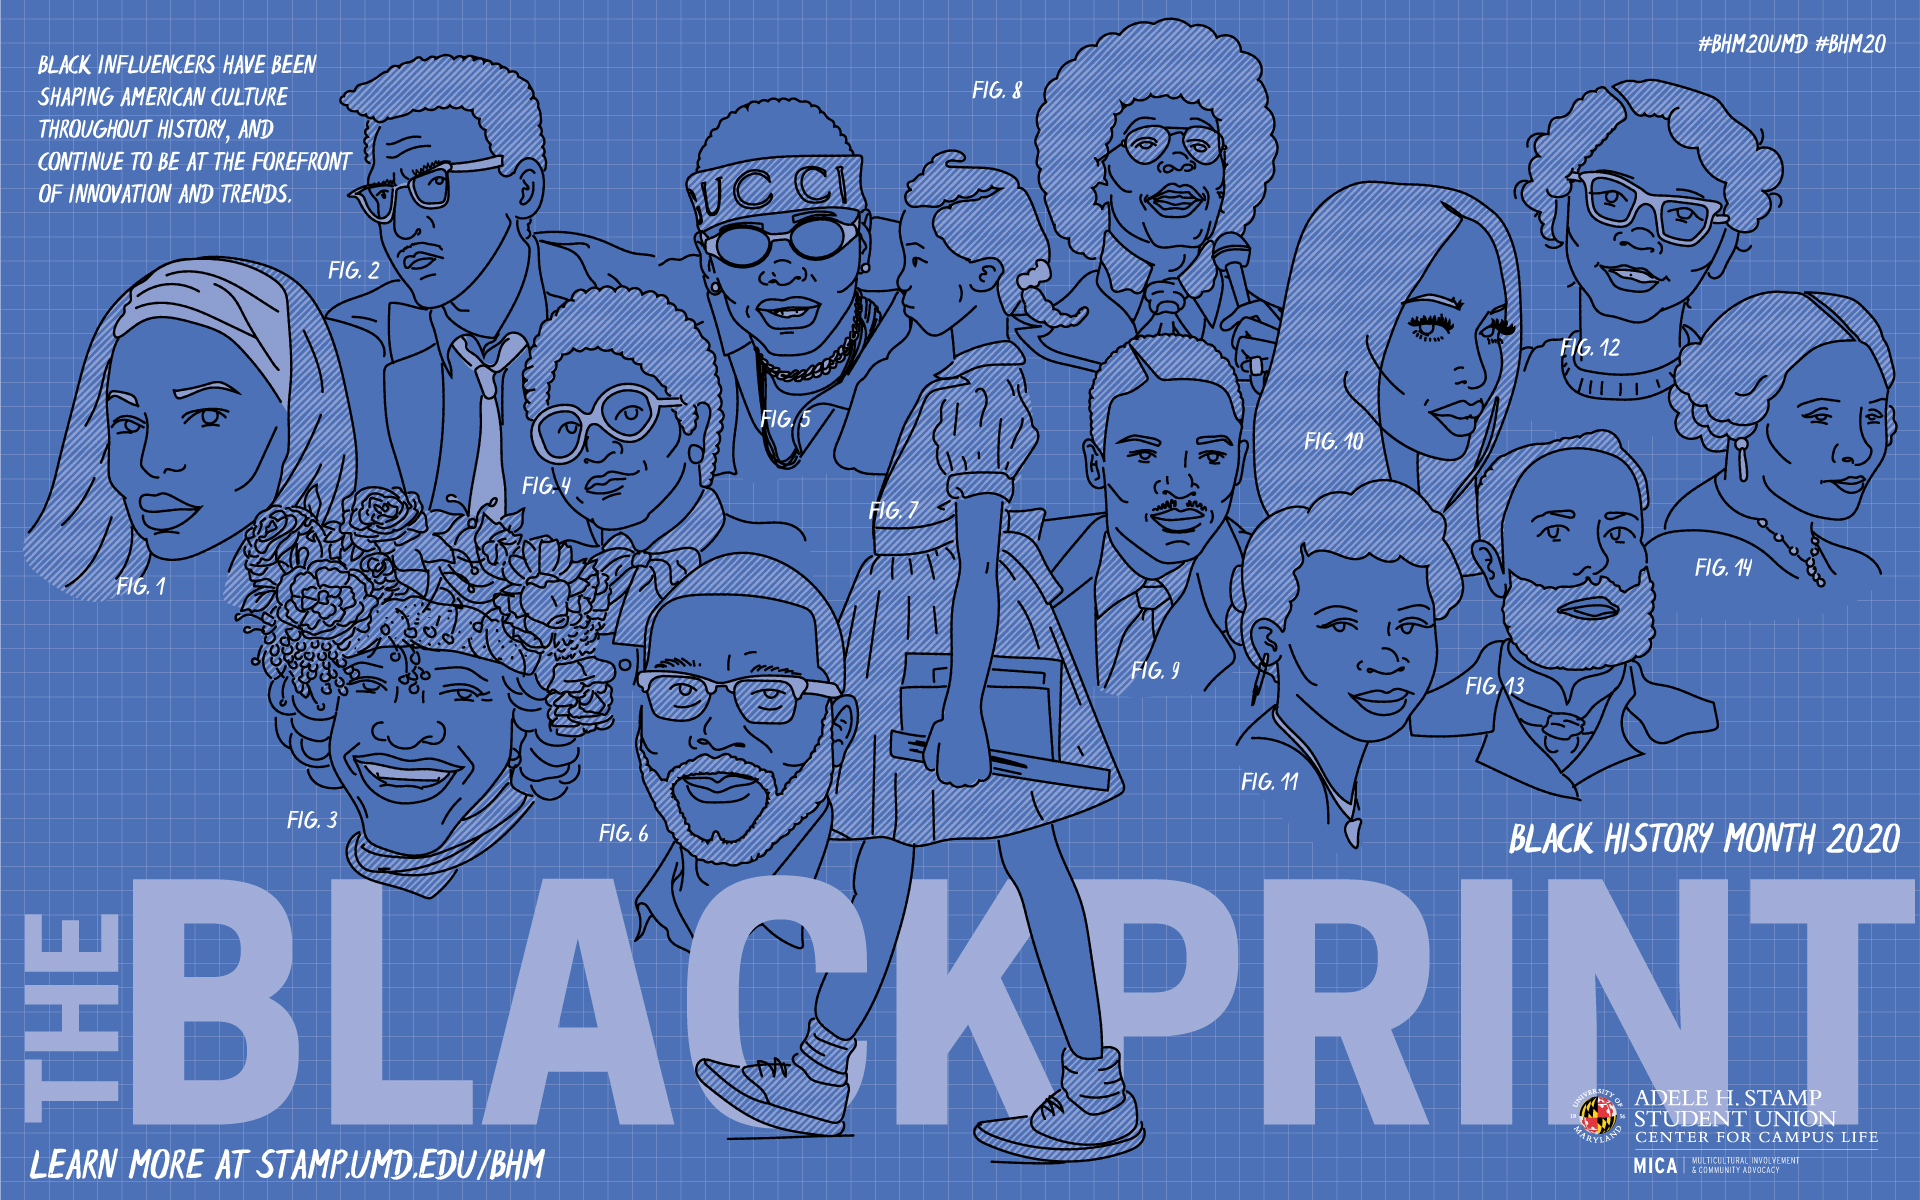 University of Maryland: Black History Month 2020